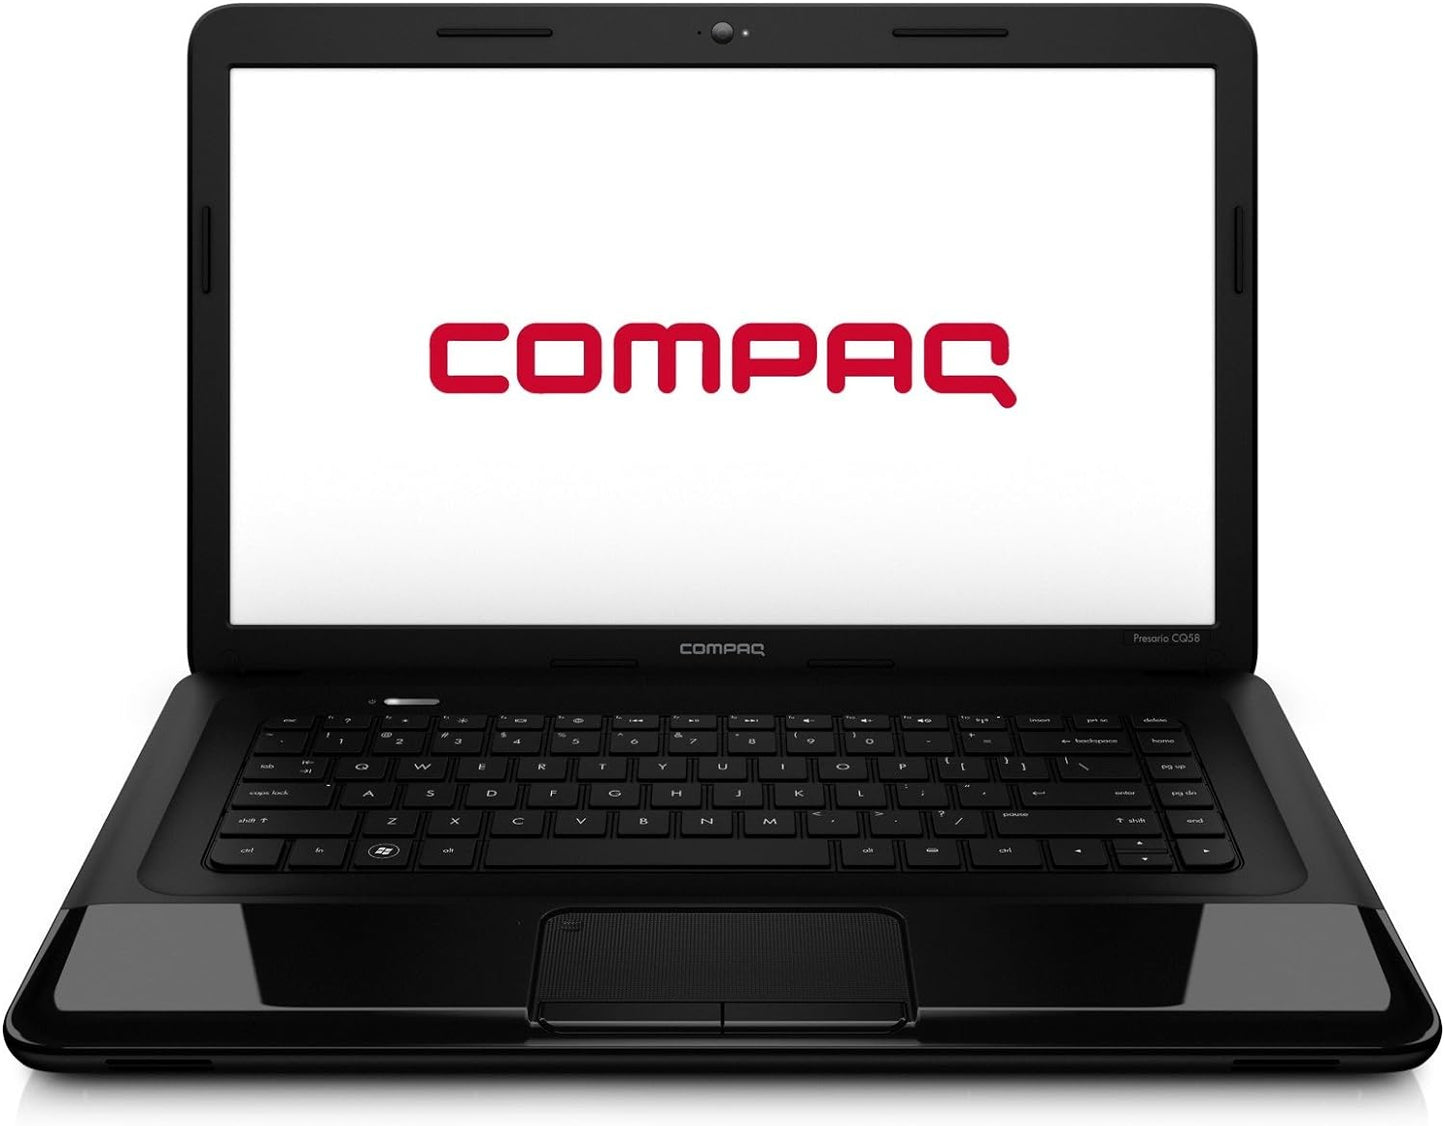 HP Compaq CQ58 - AMD E1-1200 APU With Radeon - 6GB RAM, 750GB HDD 15.6"